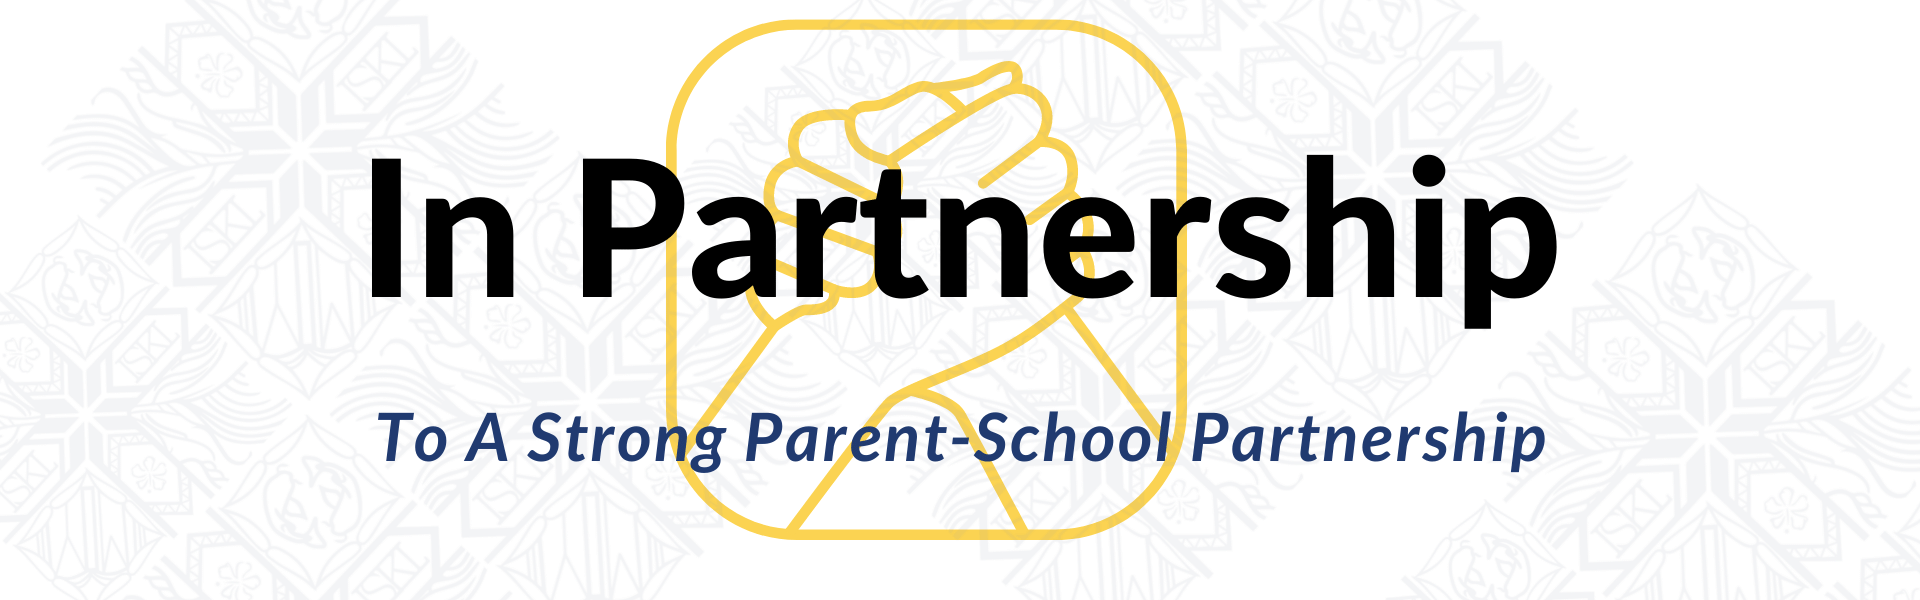 Strong parent school partnership 2017